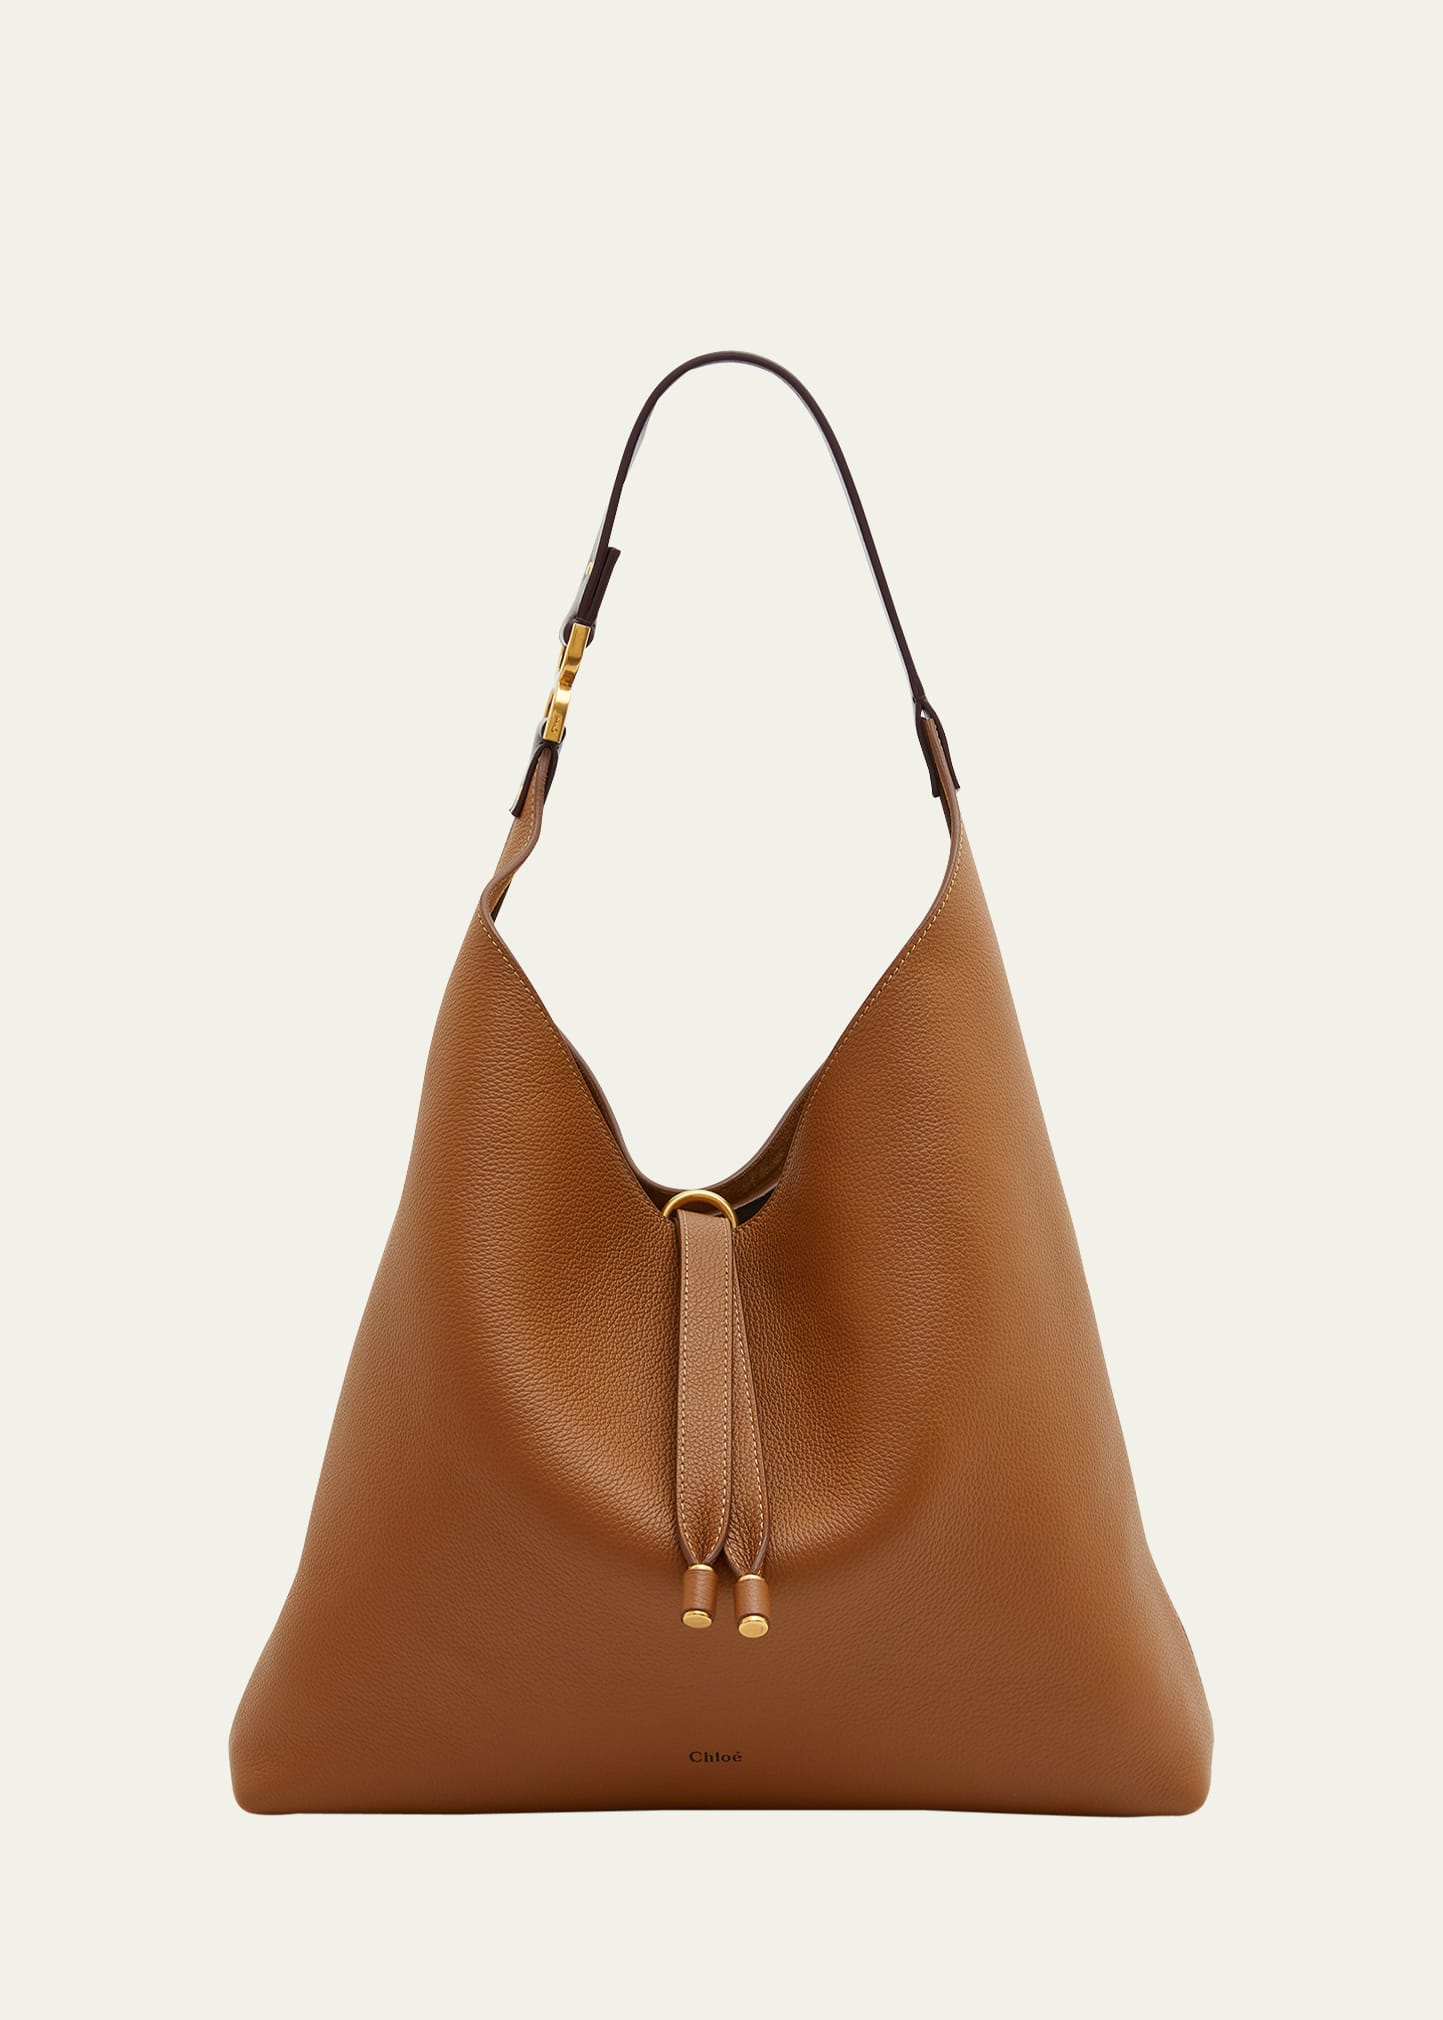 Chloe Marcie Hobo Bag in Grained Leather | Bergdorf Goodman